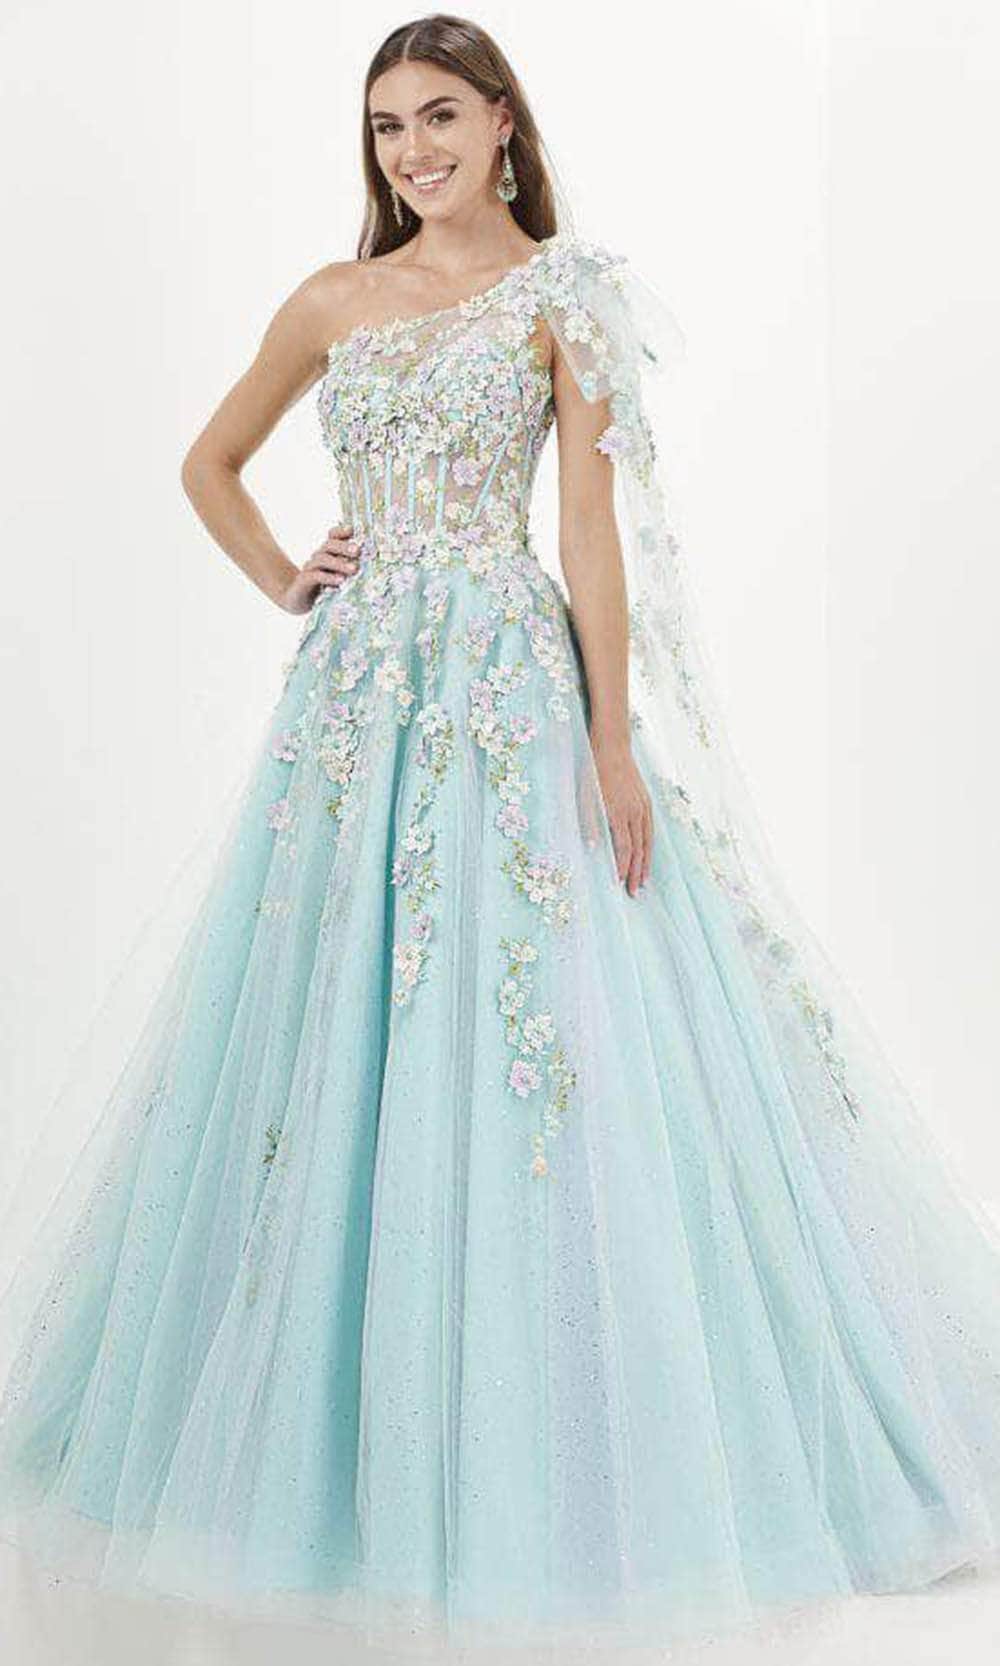 Tiffany Designs 16079 - Floral Appliqued Asymmetric Evening Gown
